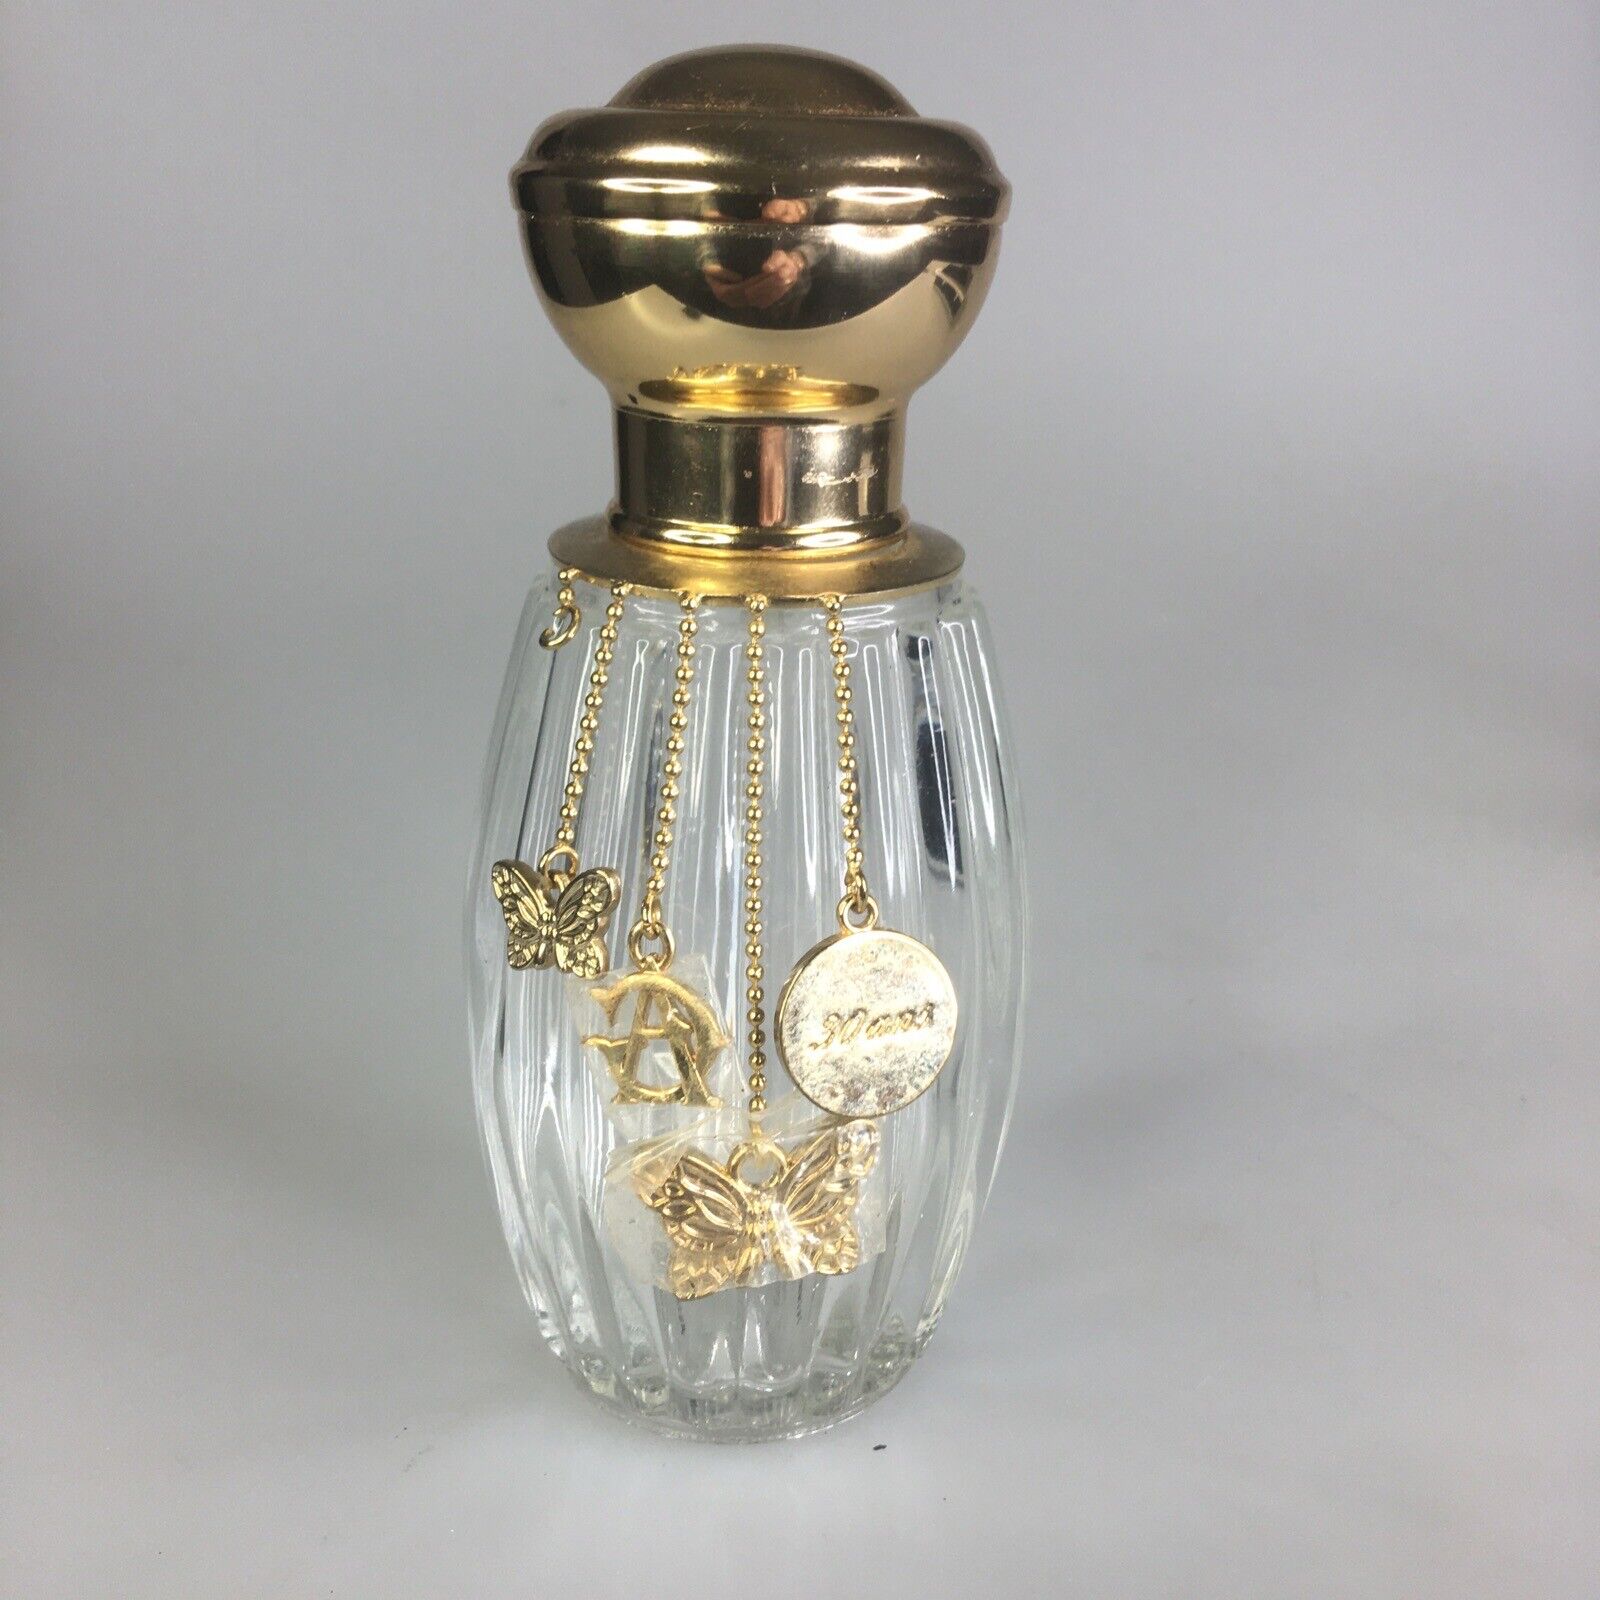 Annick Goutal Empty Perfume Fragrance Bottle with Charms Paris France 3.5 Oz